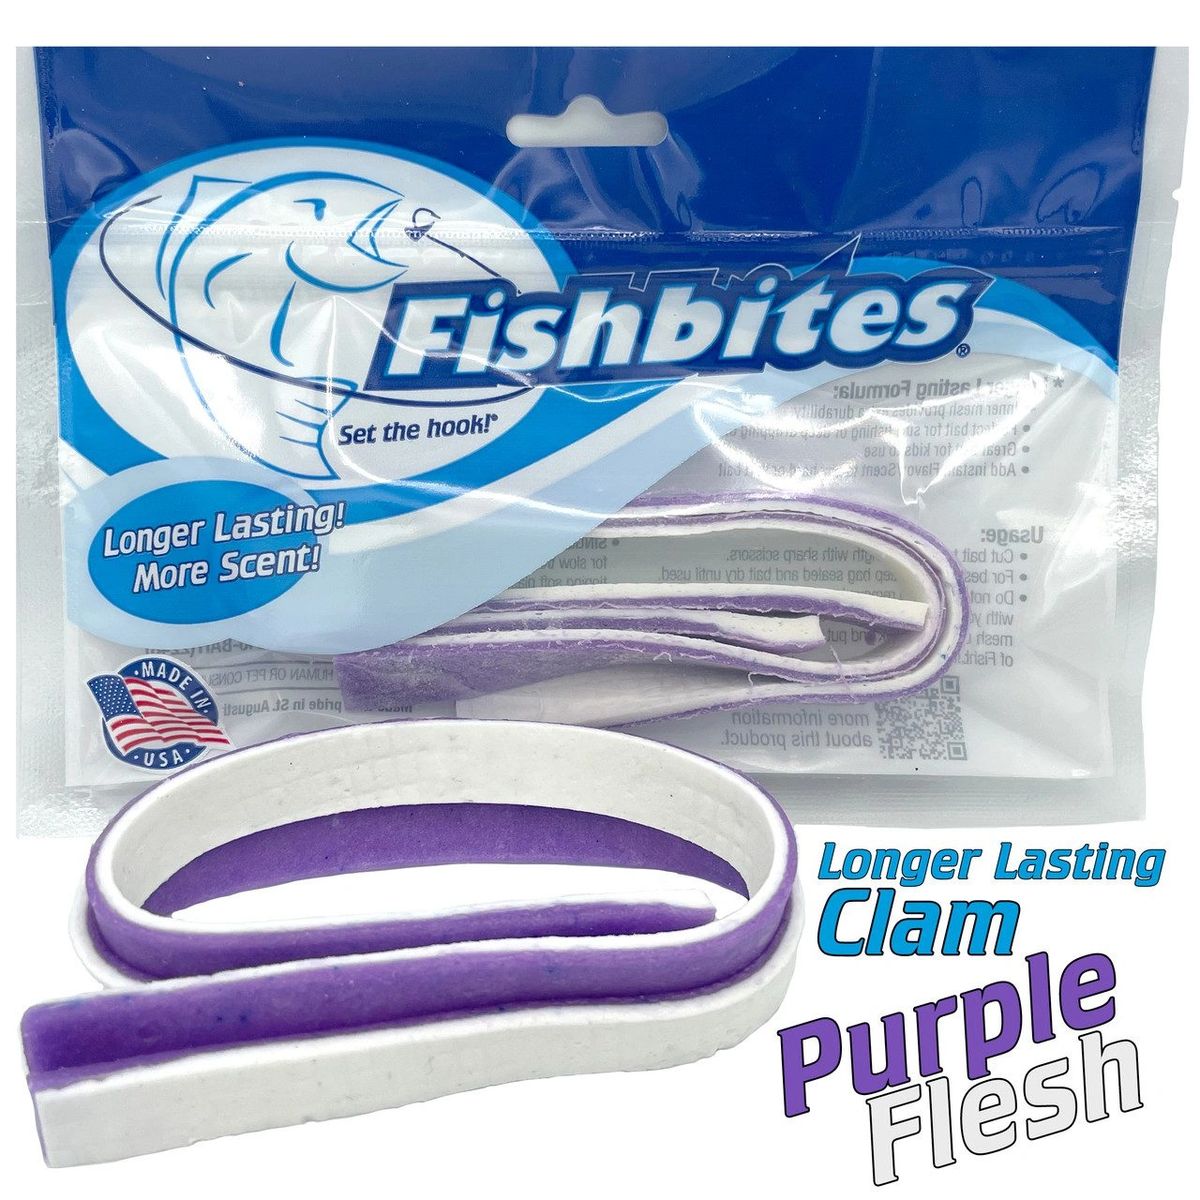 Fishbites E-Z Clam Longer Lasting